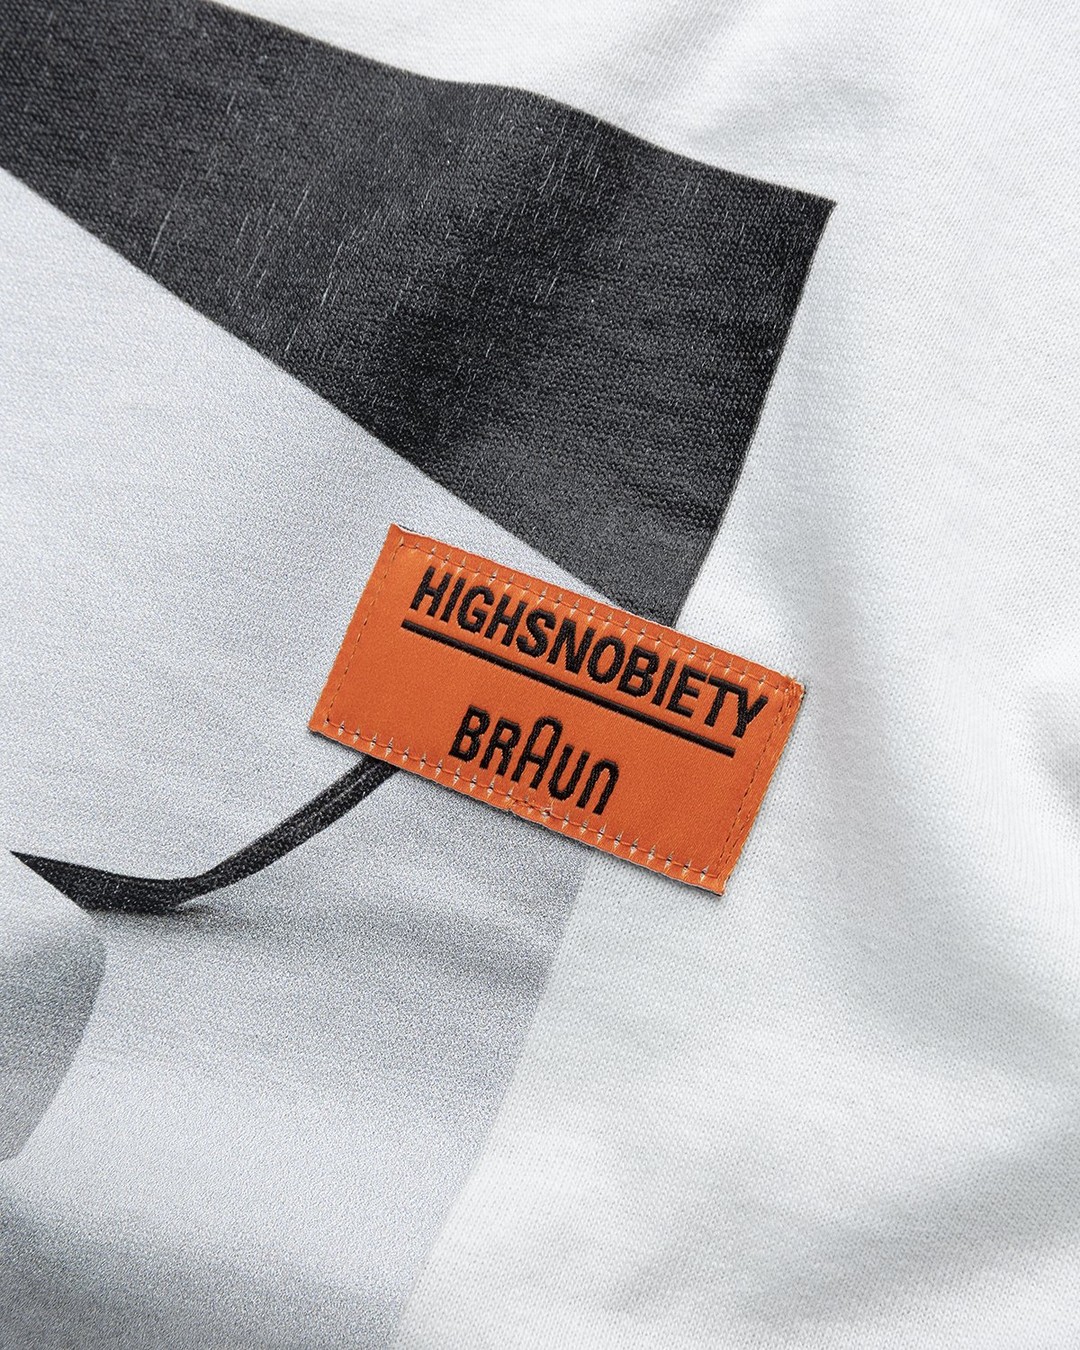 BRAUN x Highsnobiety – DN 40 T-Shirt Light Grey | Highsnobiety Shop